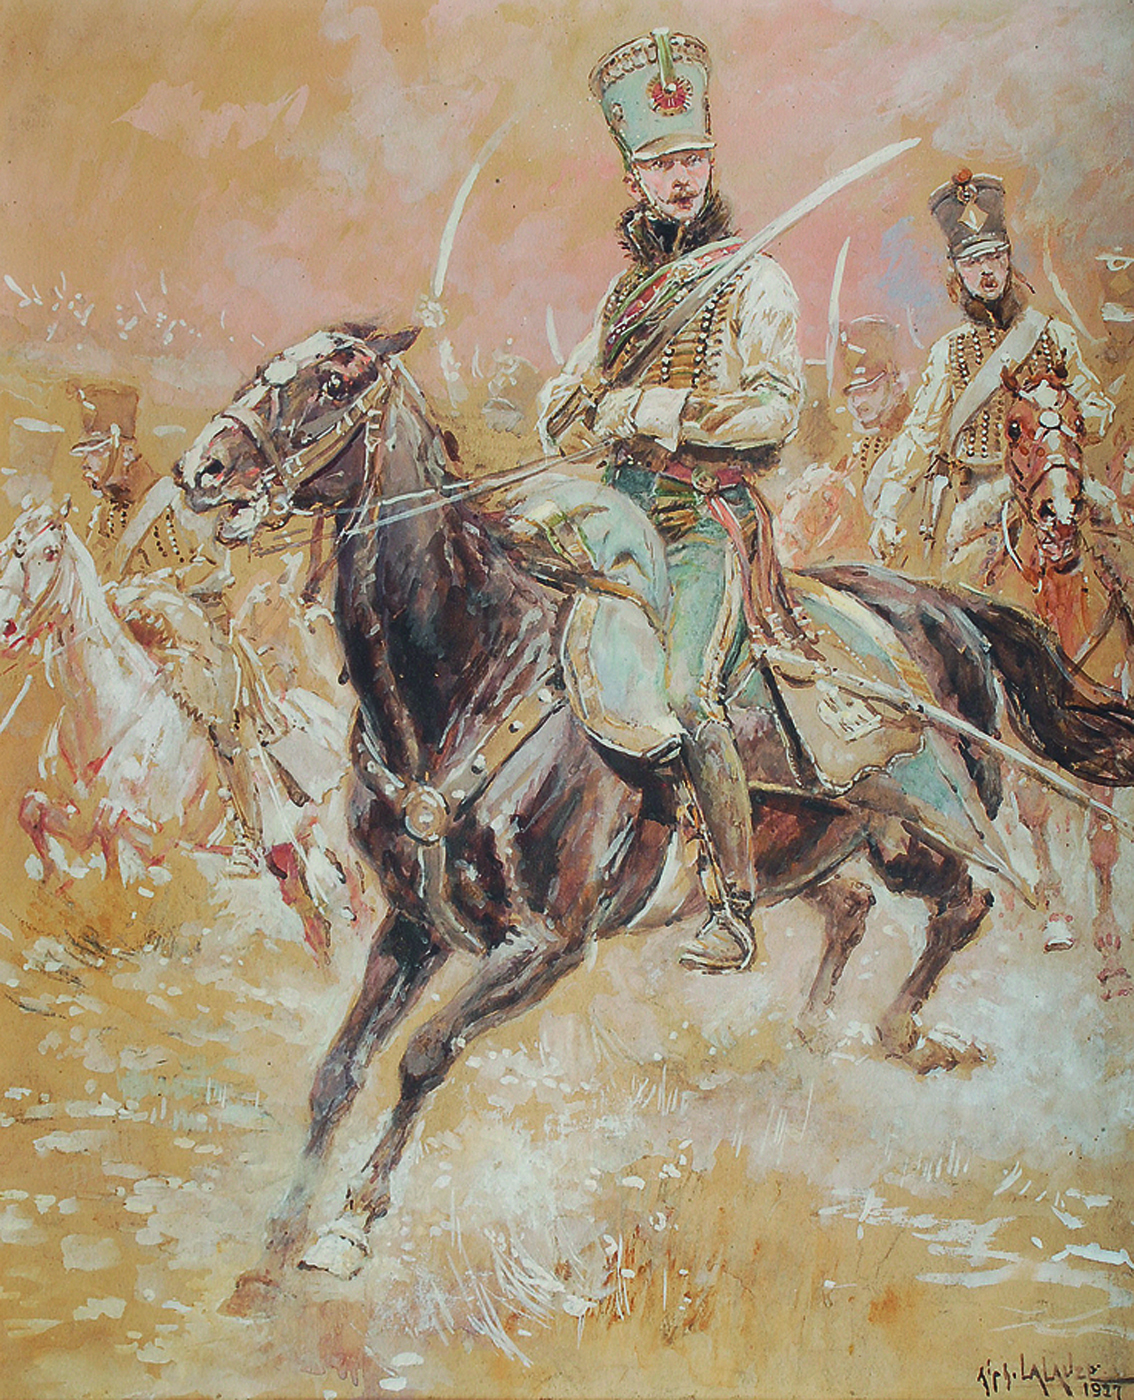 A Napoleonic rider